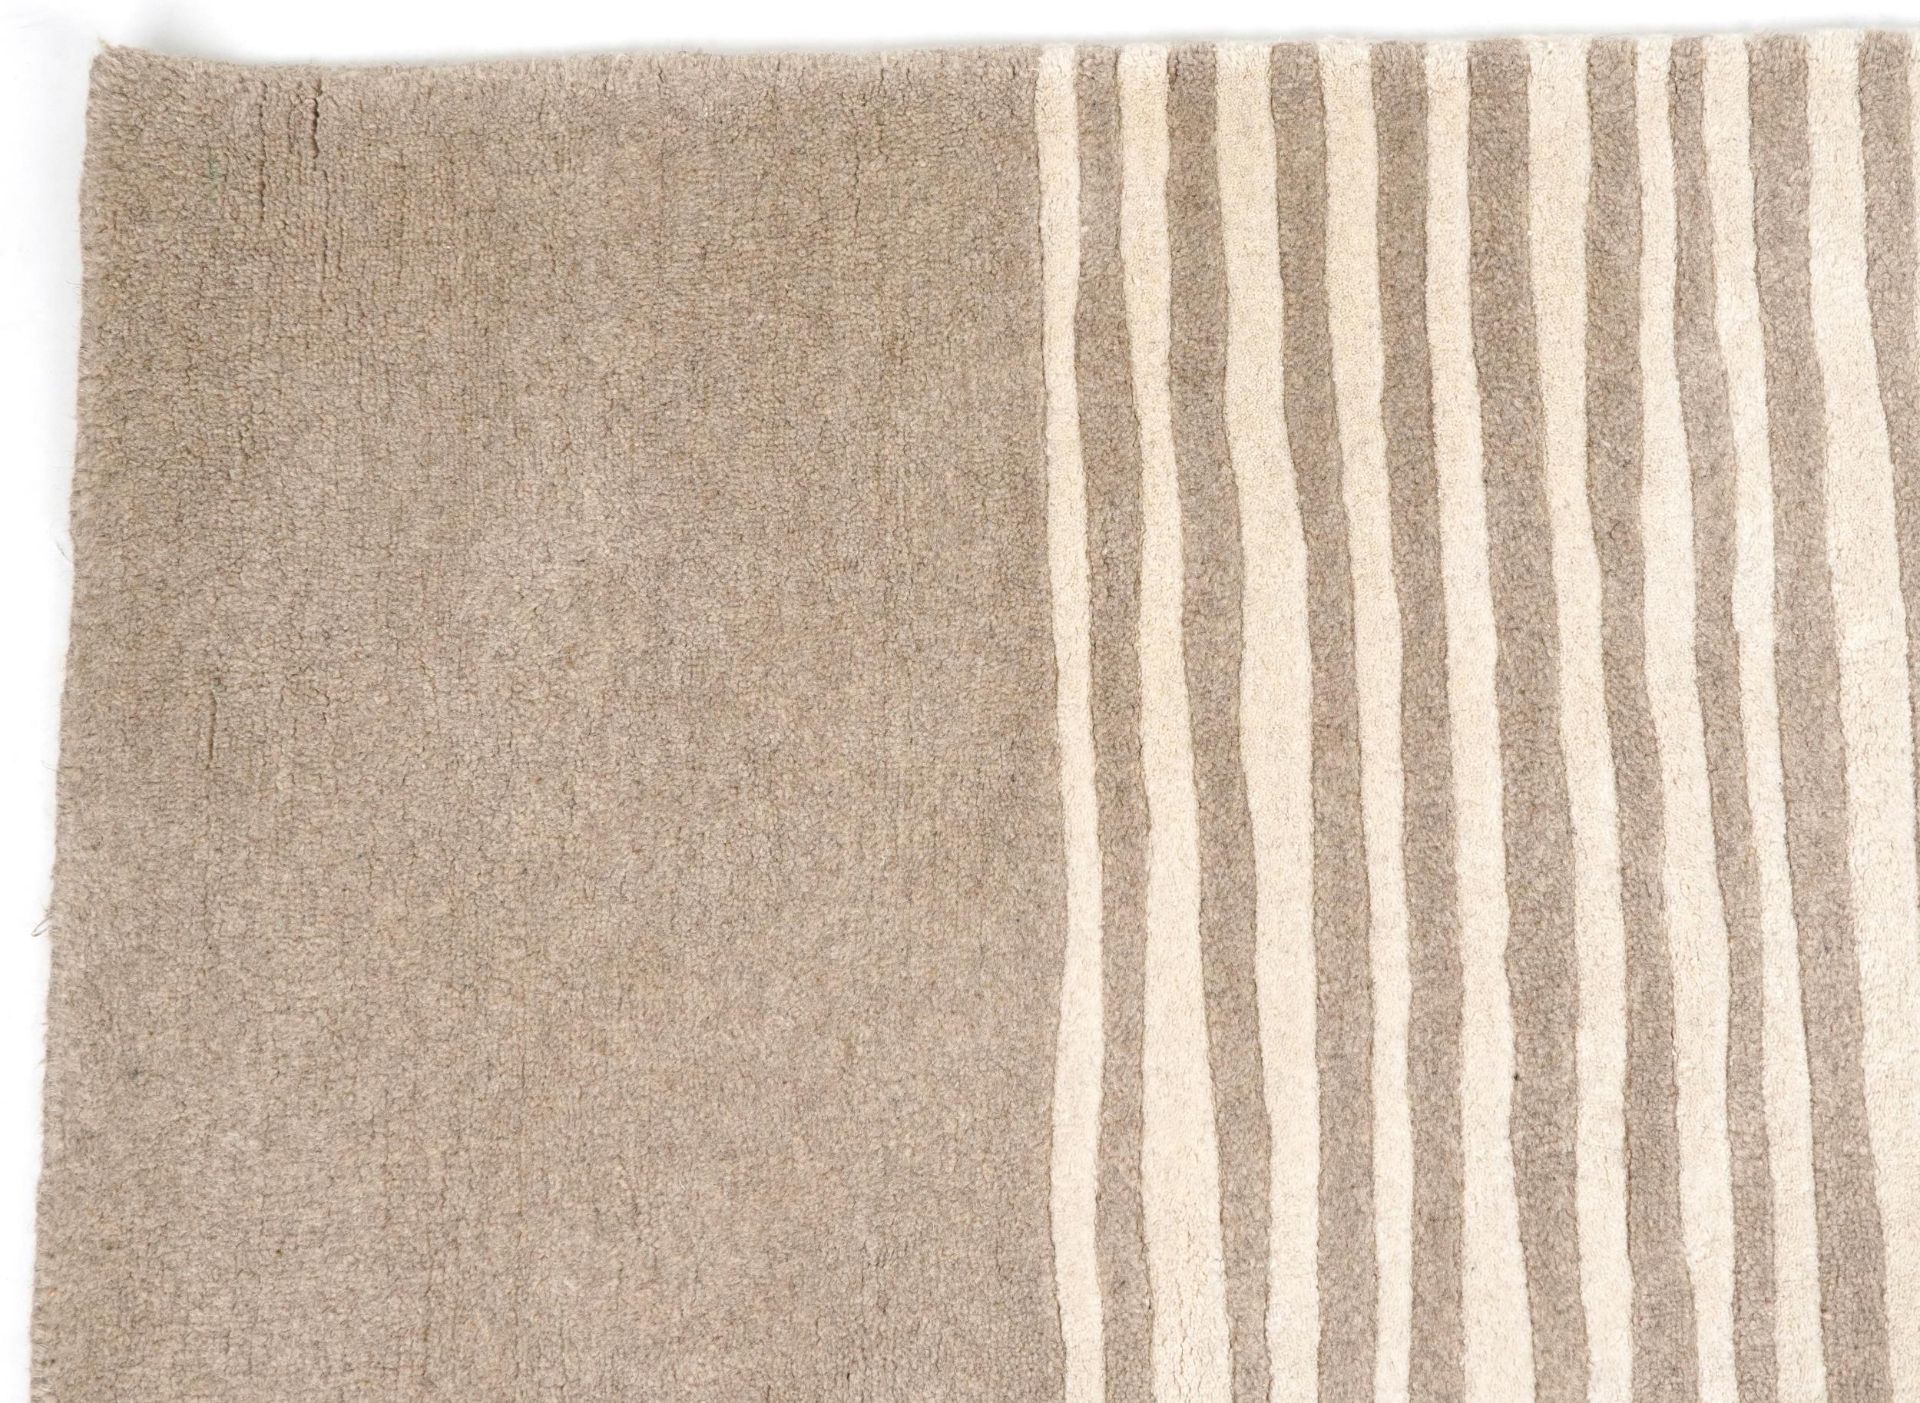 Pair of Kelaty contemporary wool rugs, 180cm x 120cm - Image 3 of 16